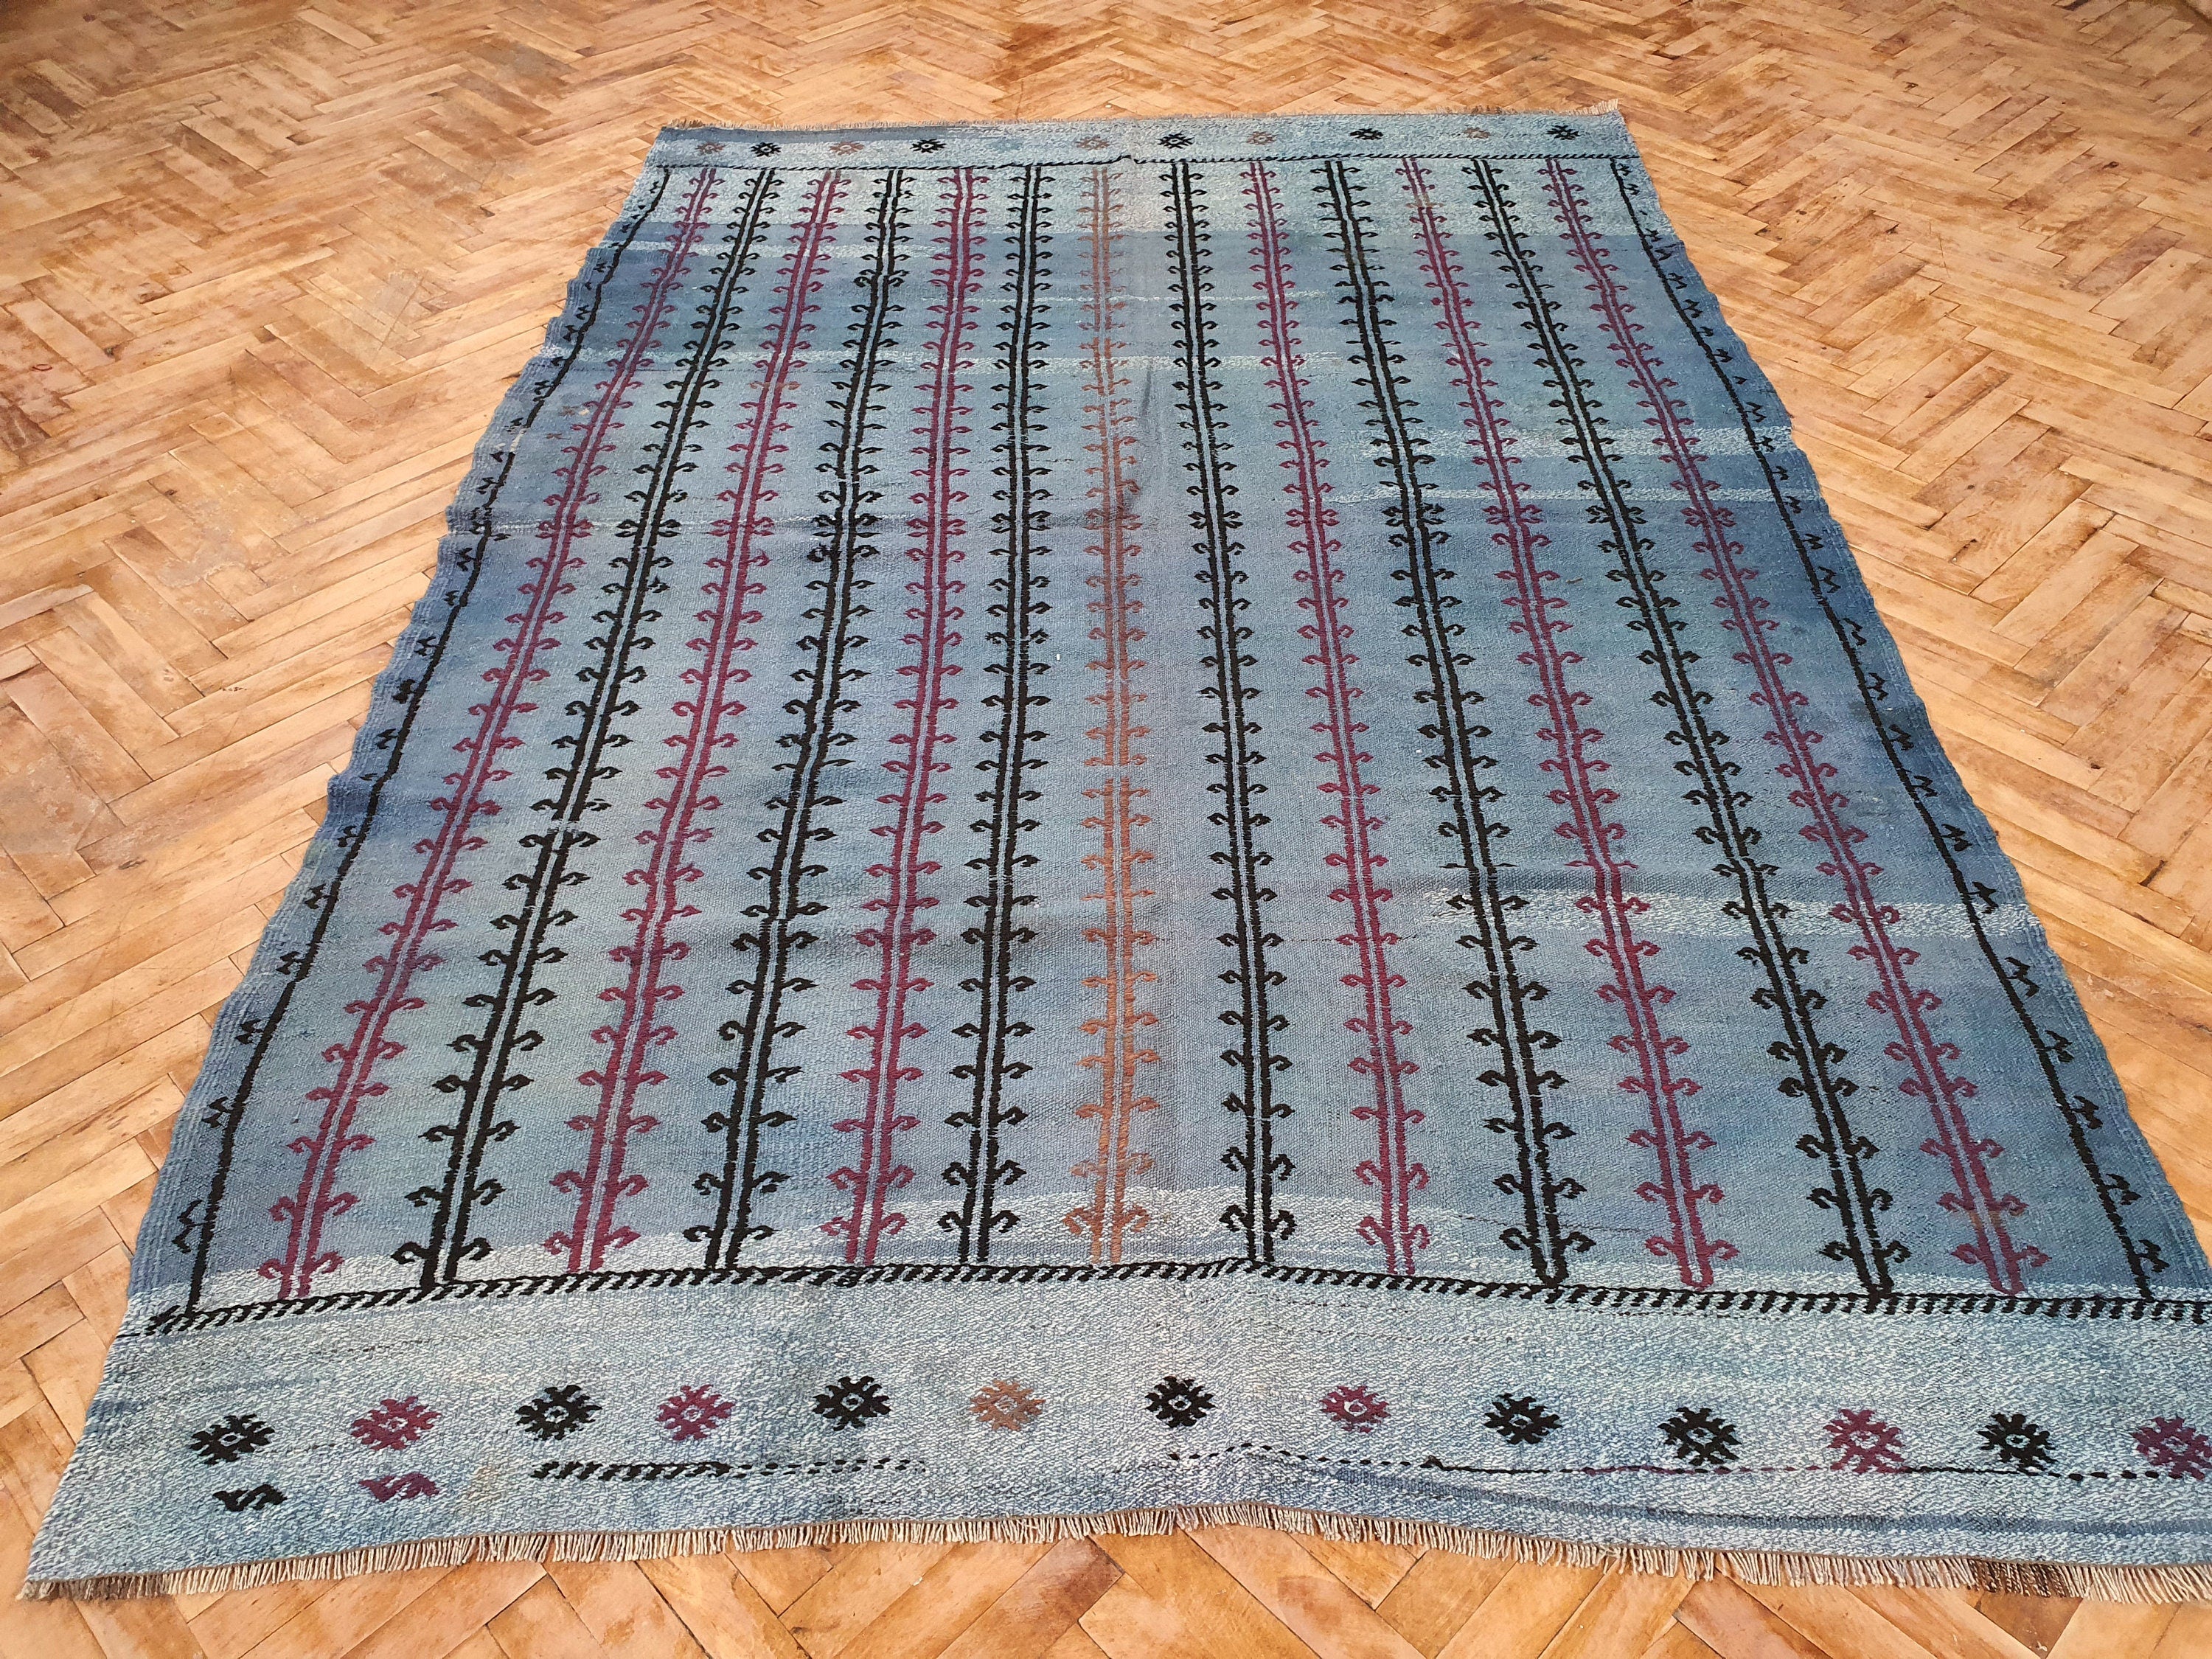 Vintage Balikesir Turkish Kilim Rug, Embroidered Anatolian Handmade Organic Wool Kilim Rug, Bohemian Rustic Decor Persian Area Rug 8'8"x5'7'